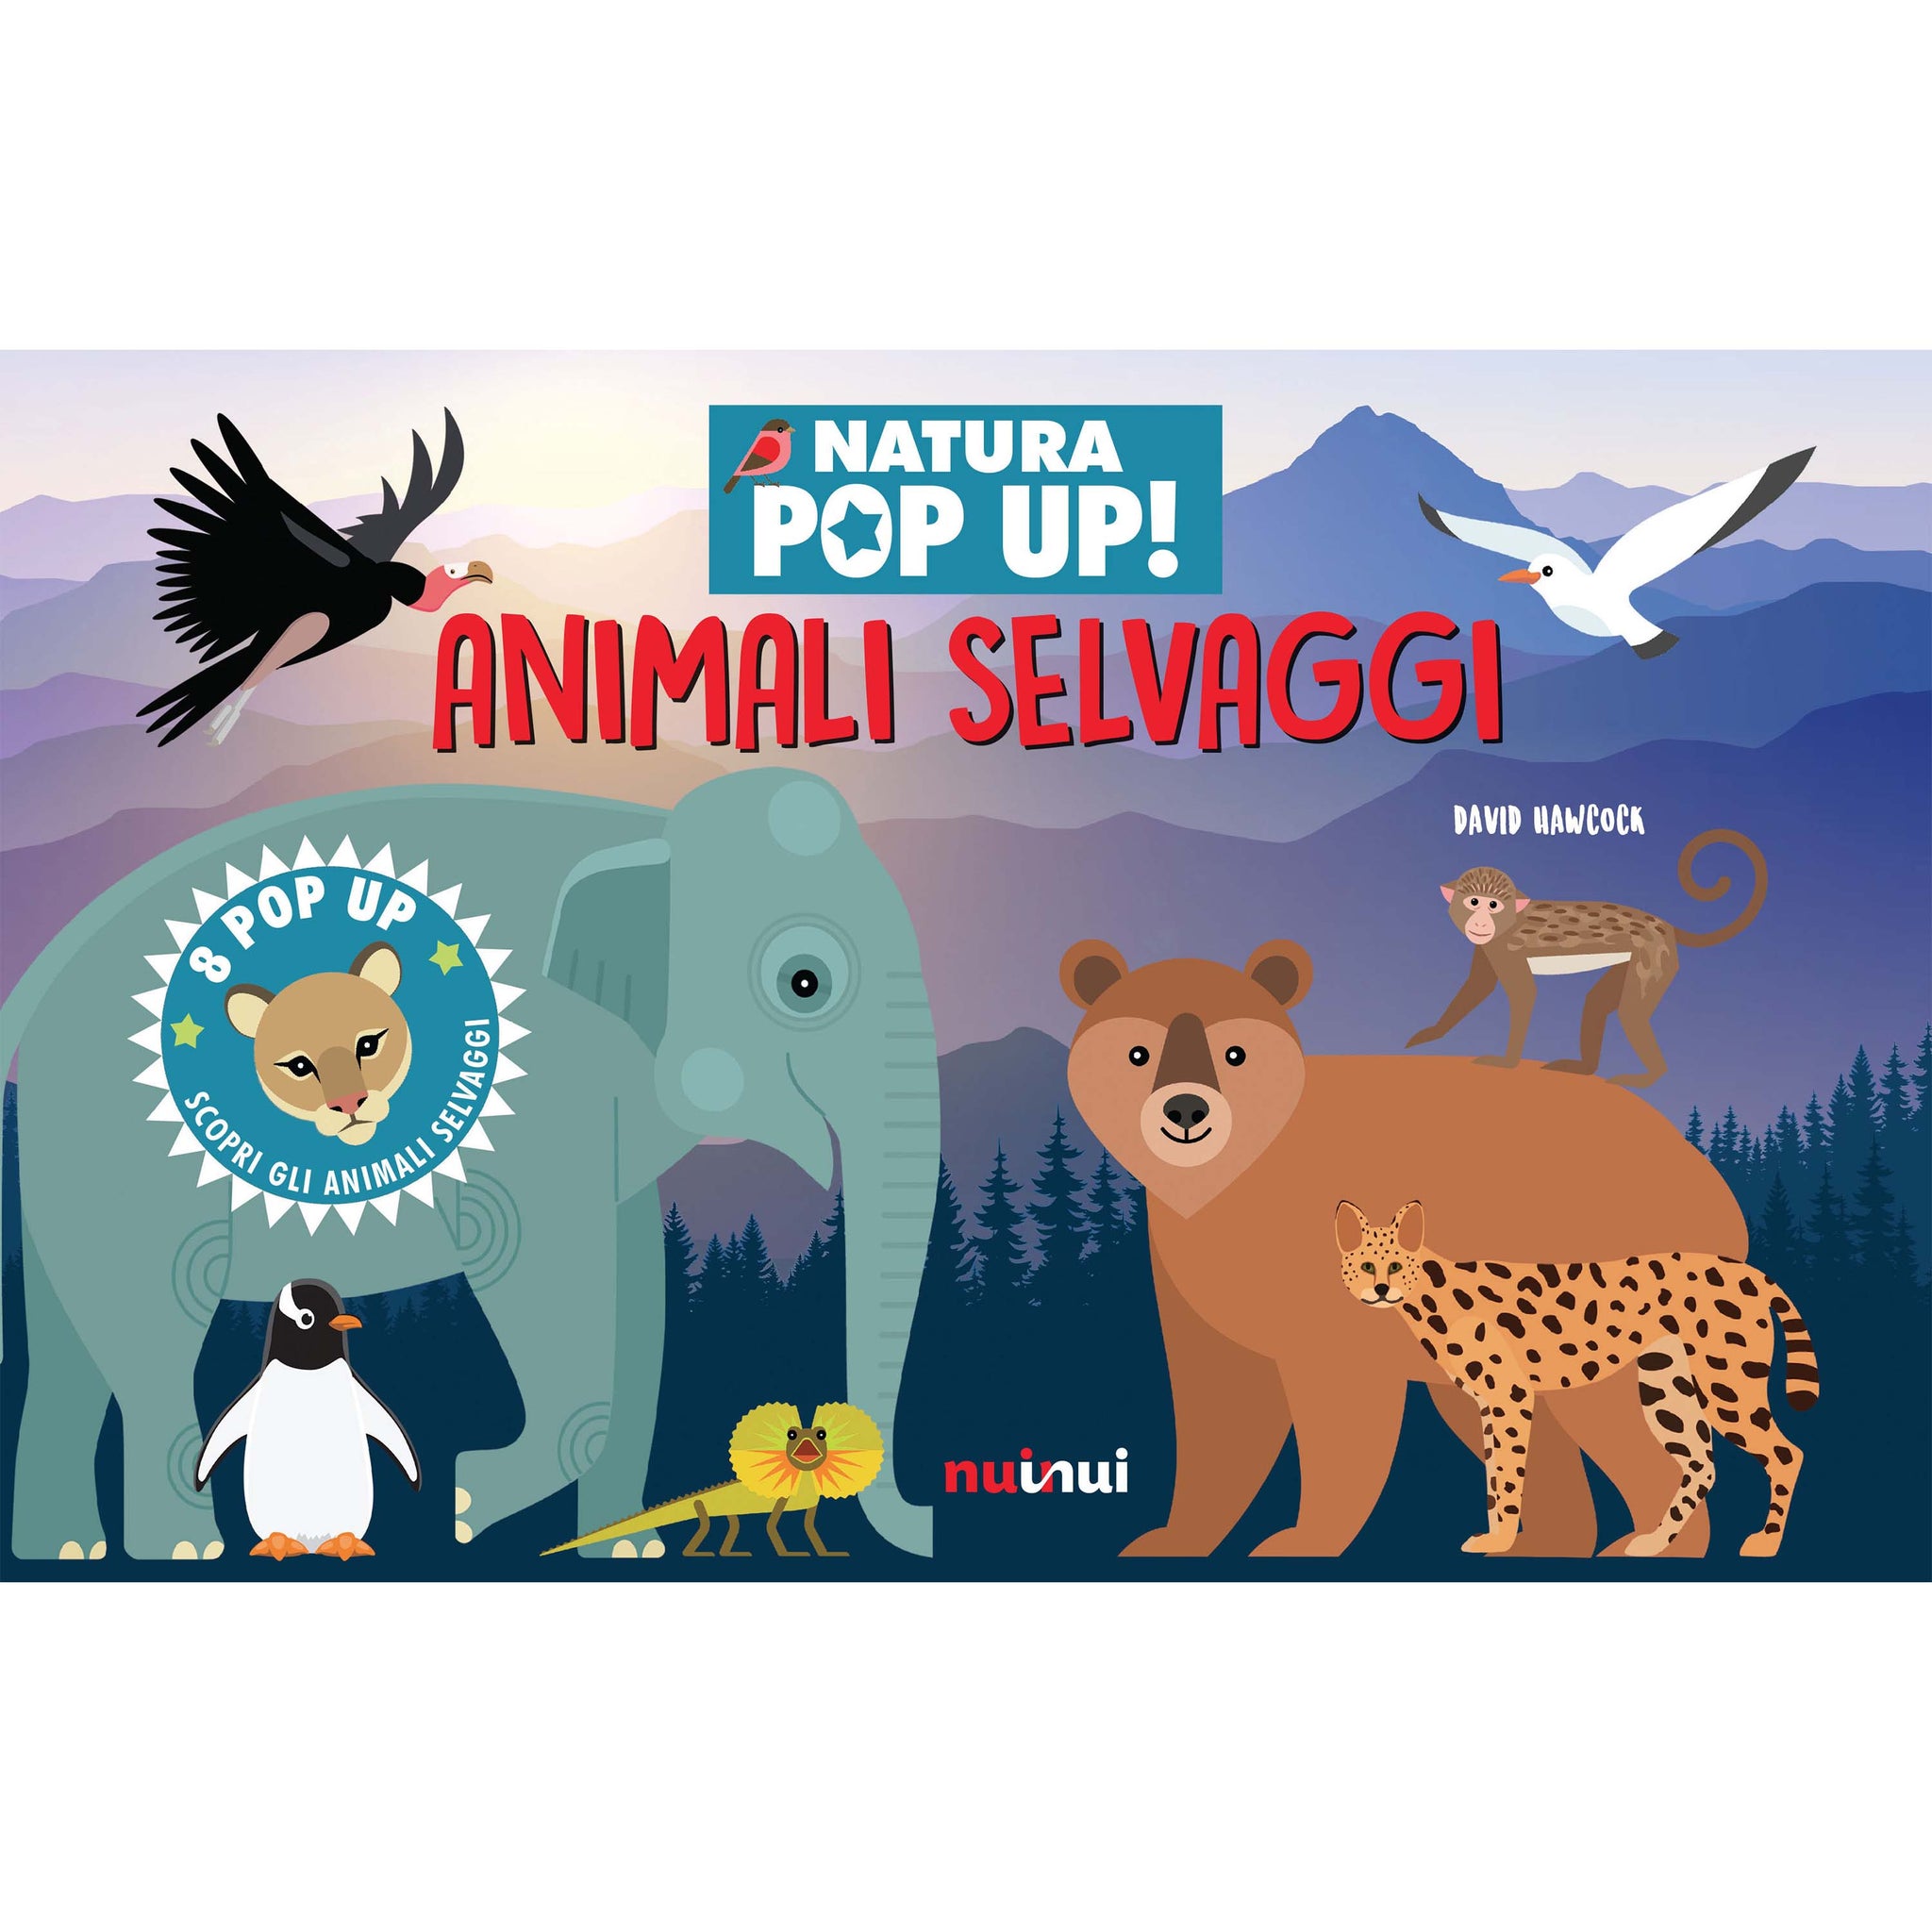 Natura pop up - Animali selvaggi